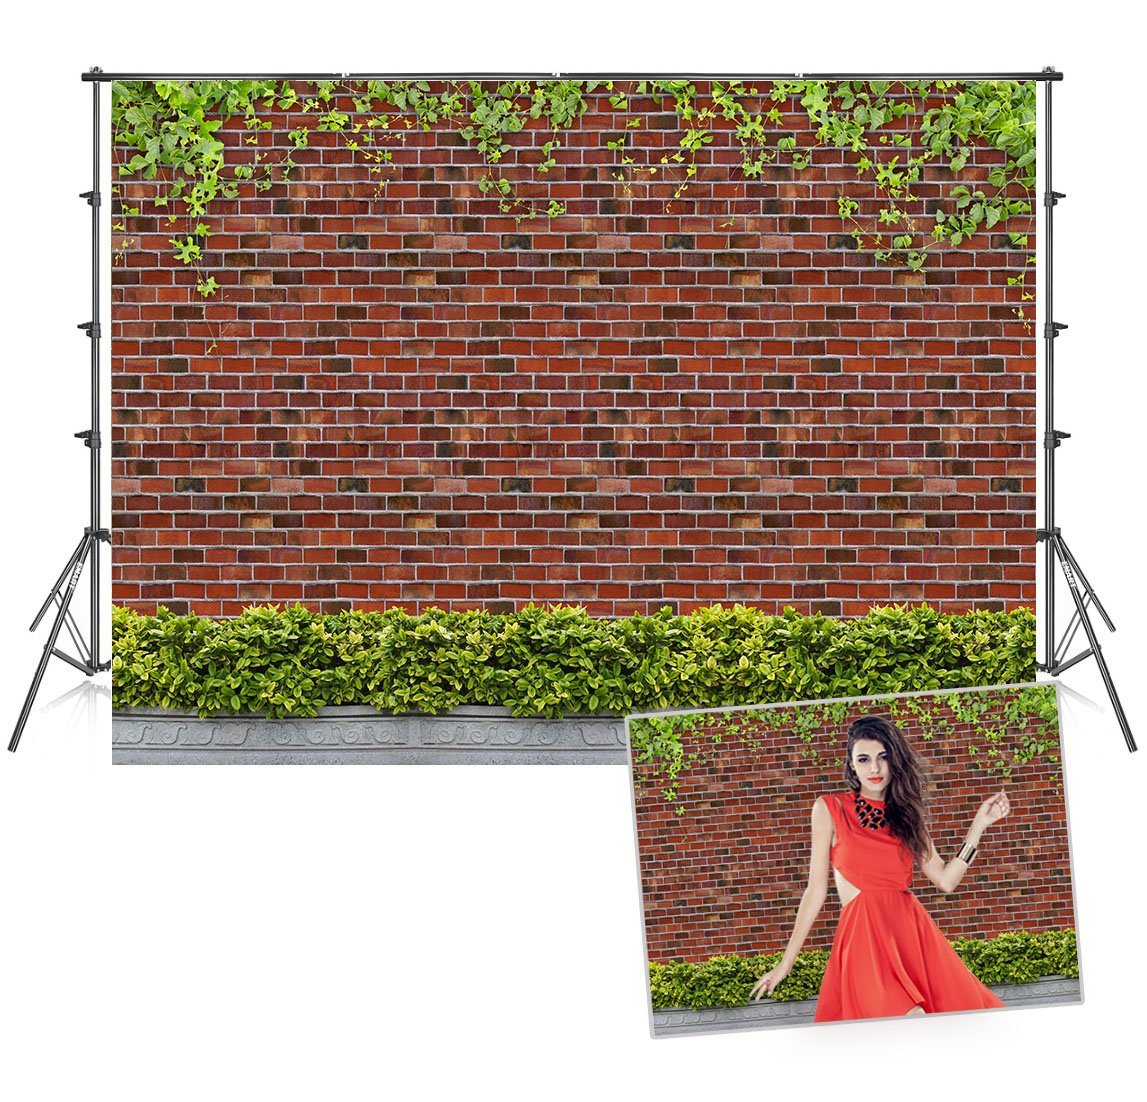 Brick Wall Creeper Green Leaves Backdrops for Photo Studio